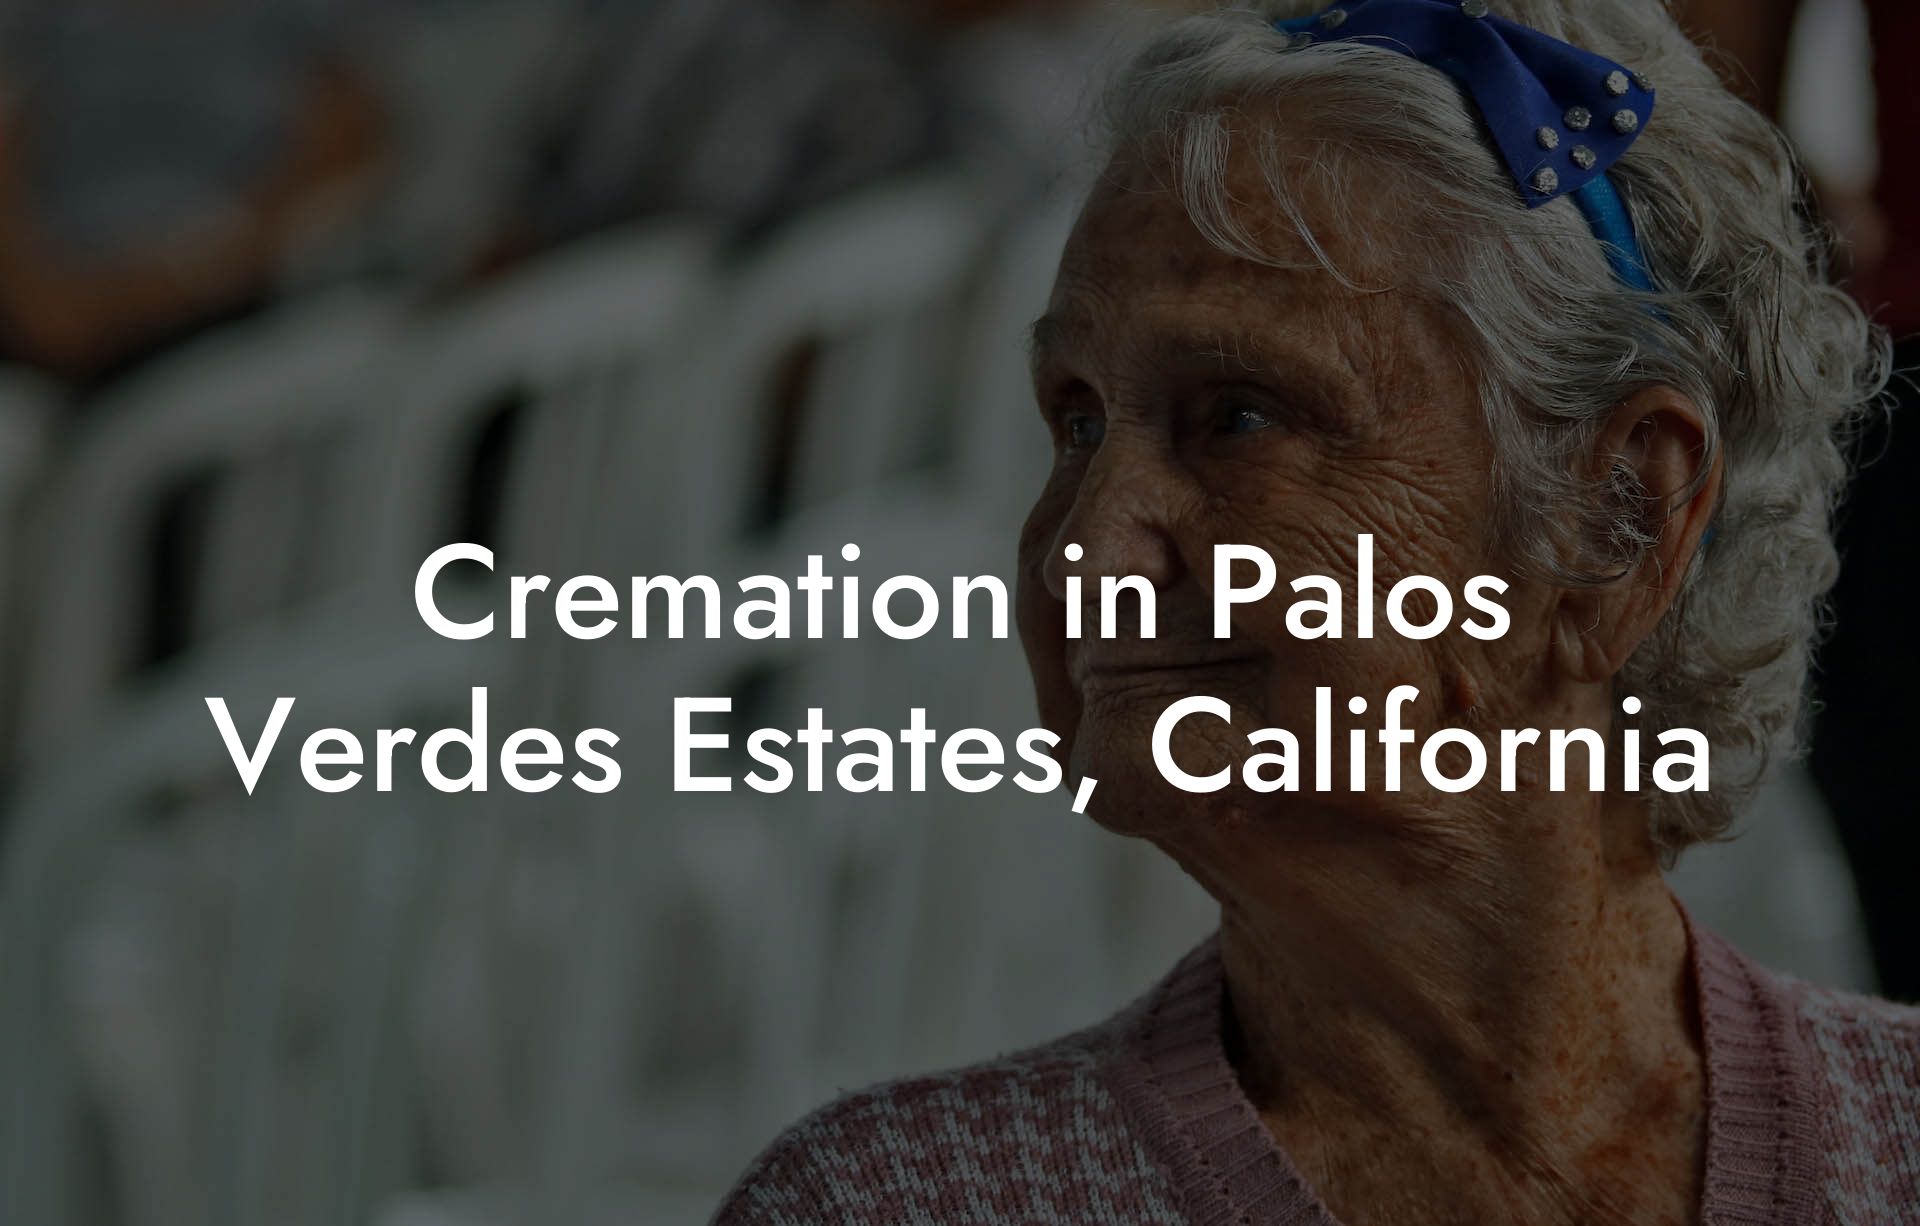 Cremation in Palos Verdes Estates, California